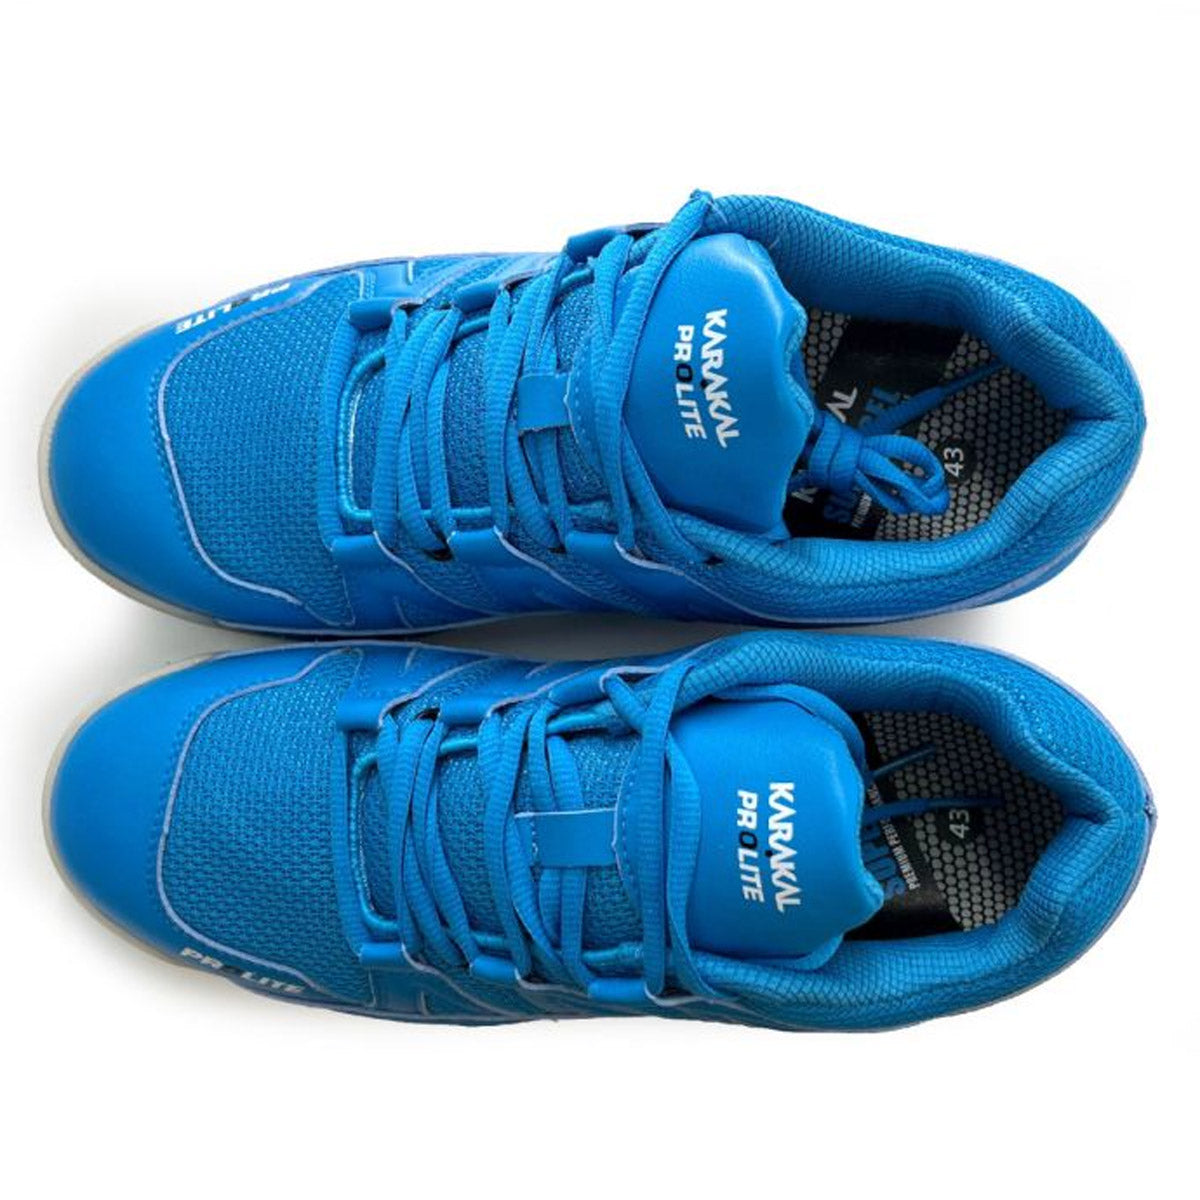 Karakal KF Pro Lite Badminton Shoes - Blue - Top